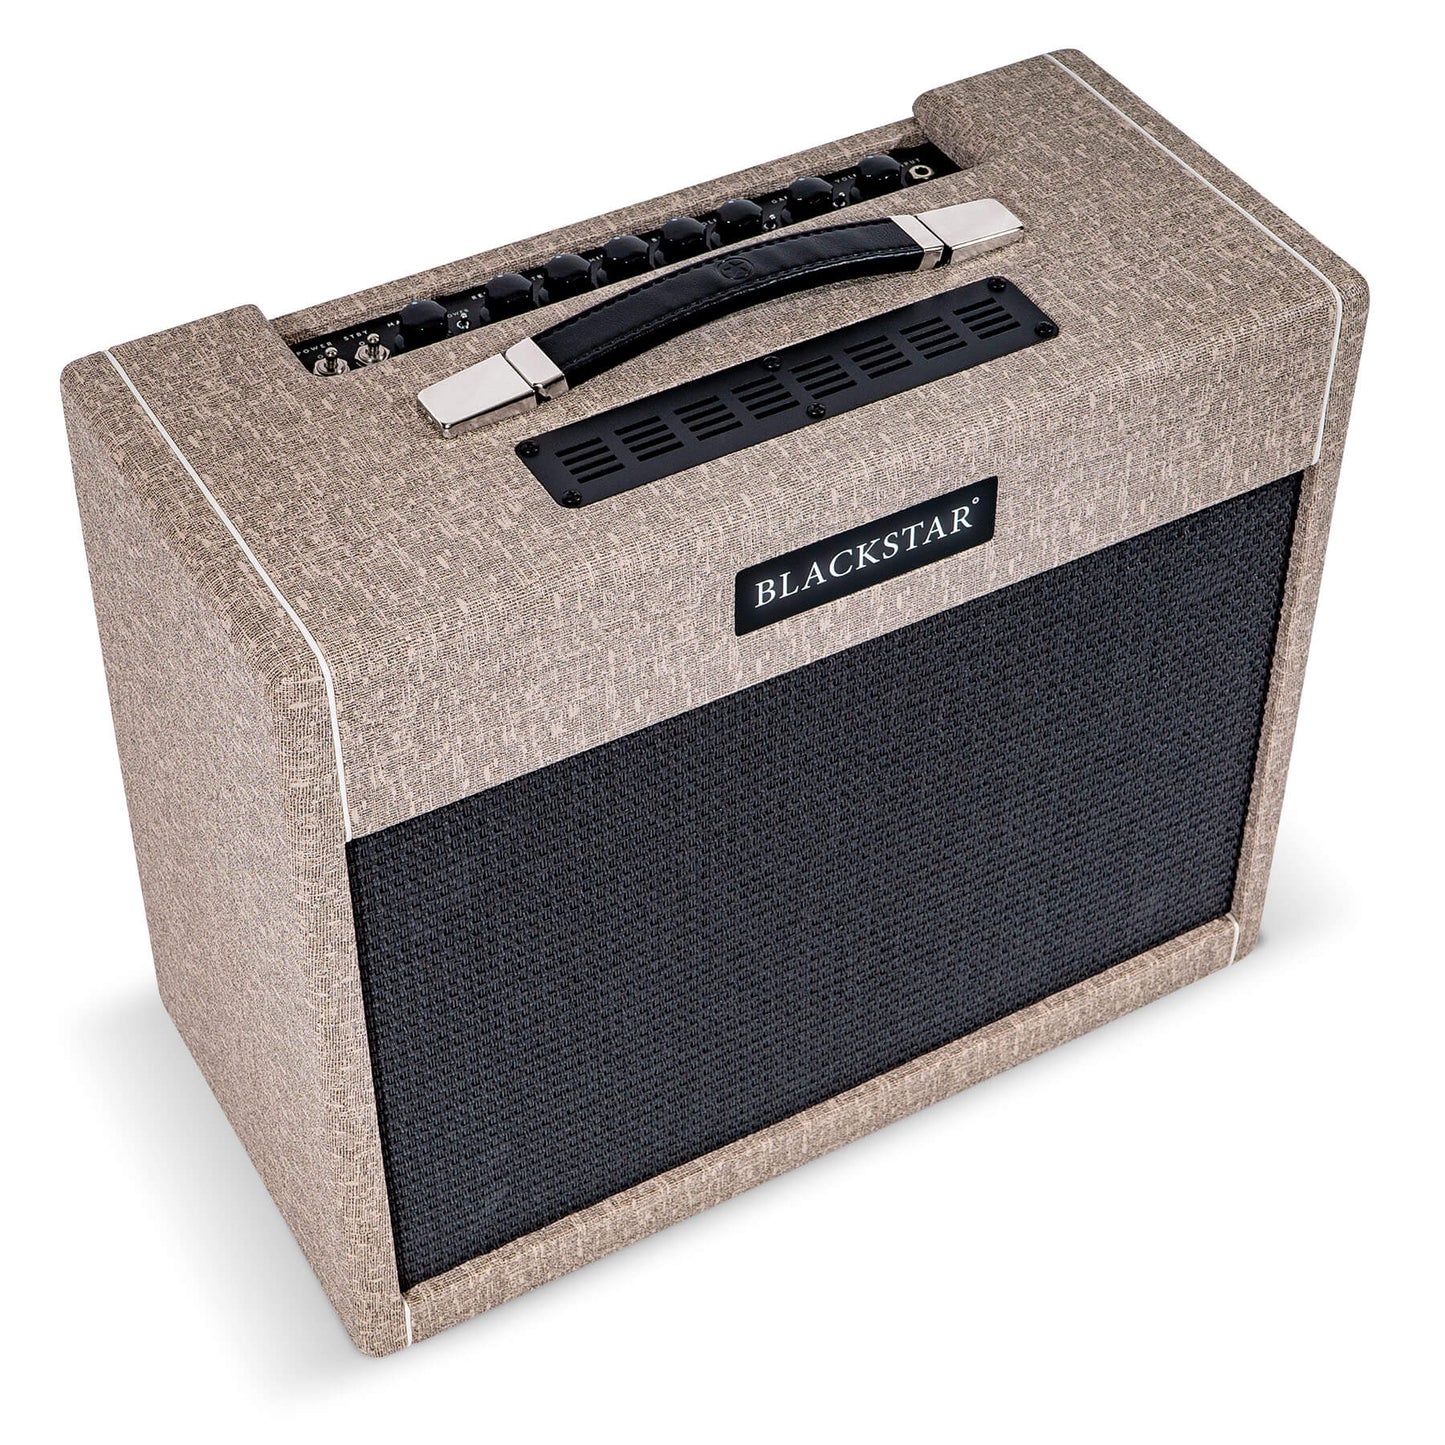 Blackstar ST. JAMES 50 EL34 COMBO Guitar Valve Amplifier - Fawn (Each)